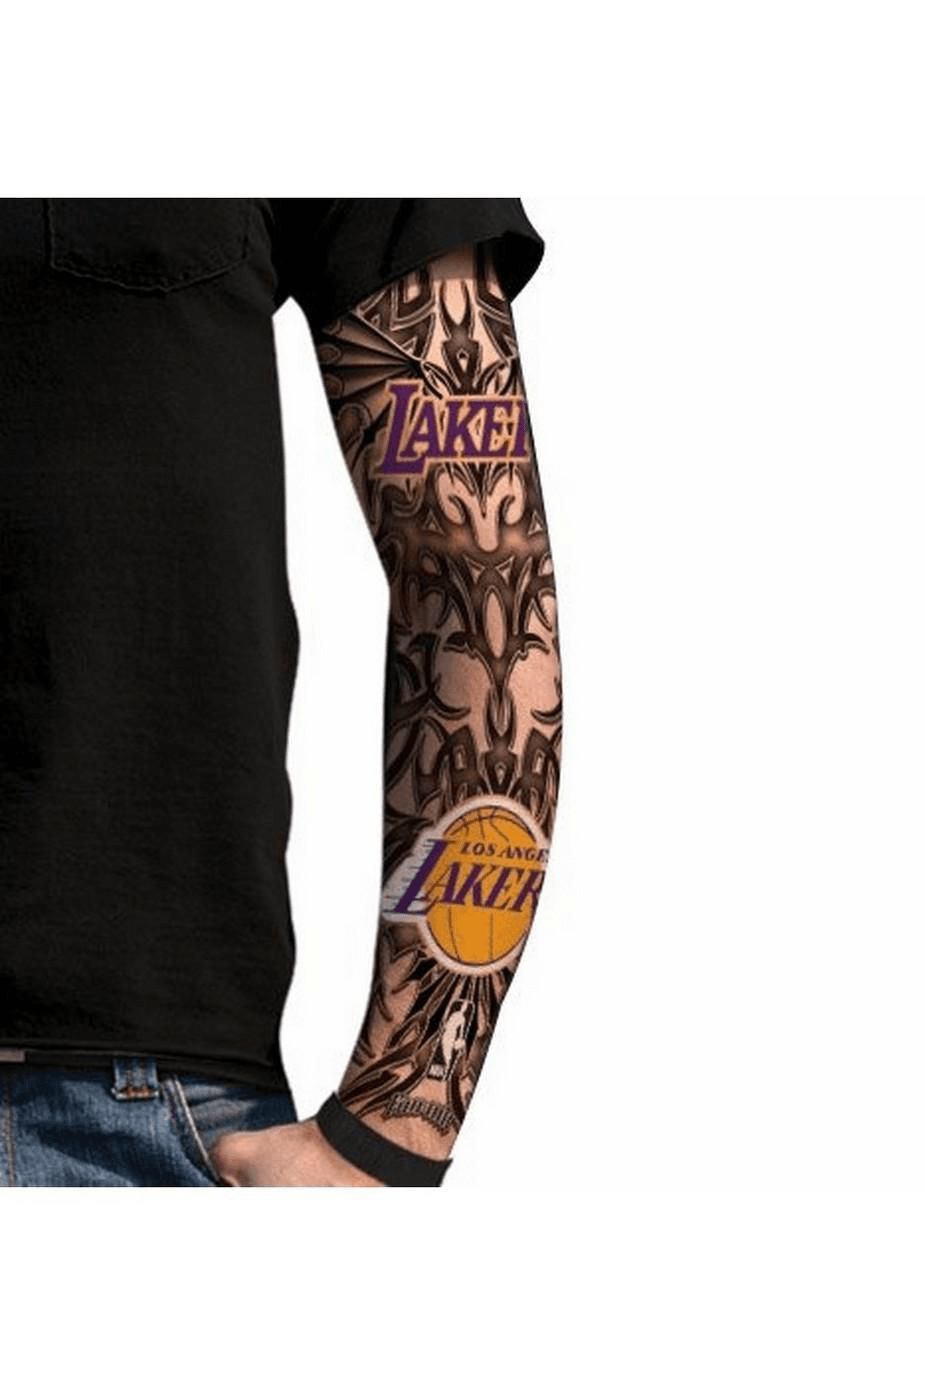 LA Lakers  Lakers Lakers kobe La lakers